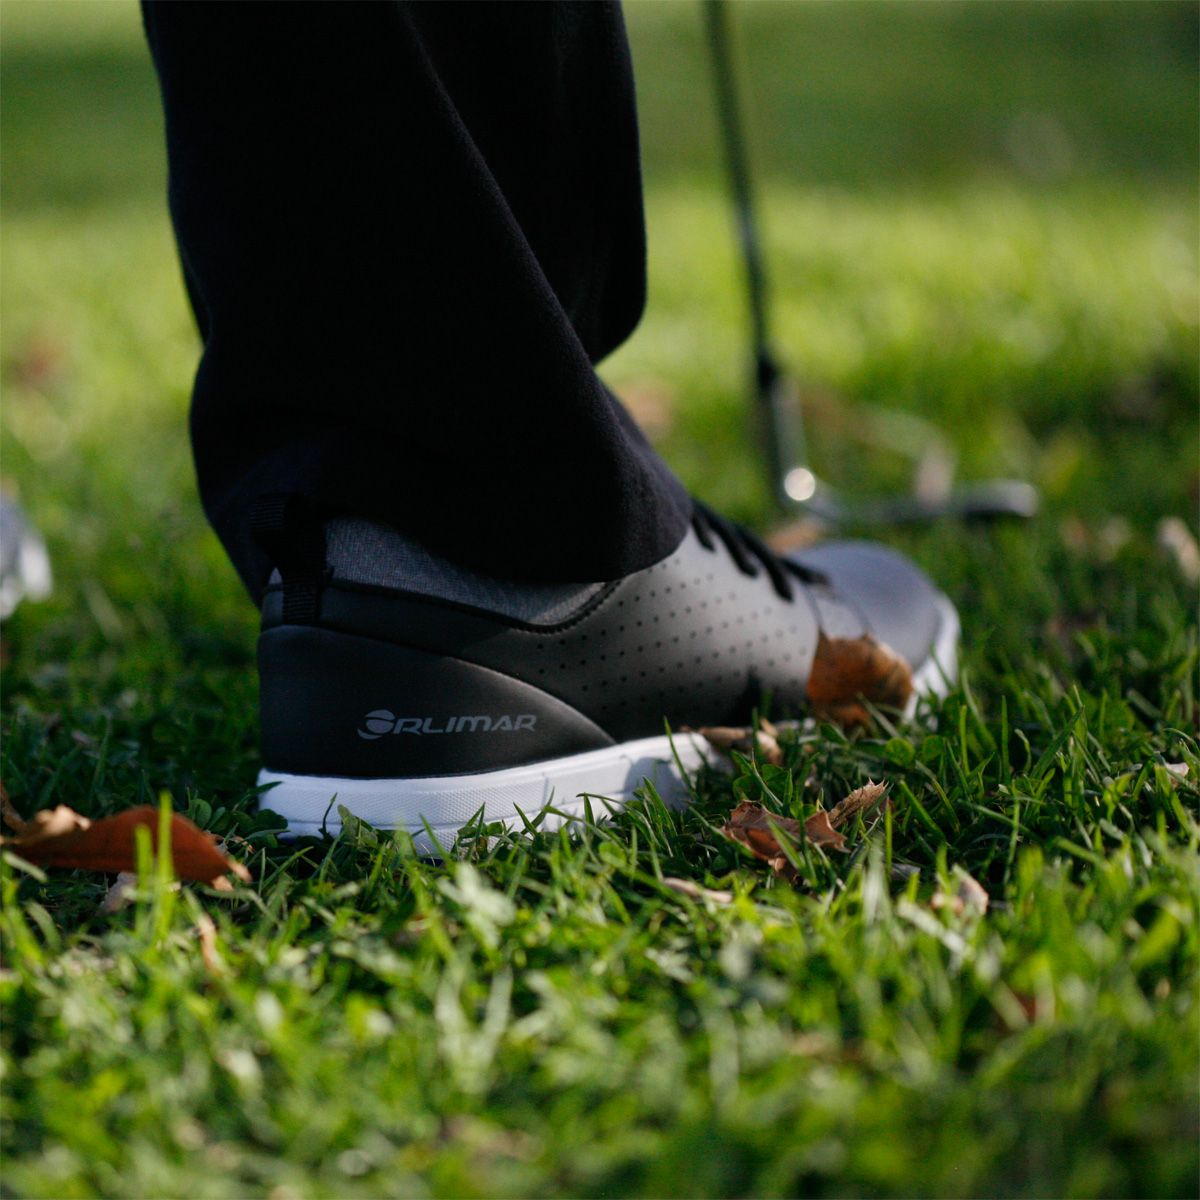 Orlimar Spikeless Golf Shoes Men's Black Wide 10 - image 5 of 6